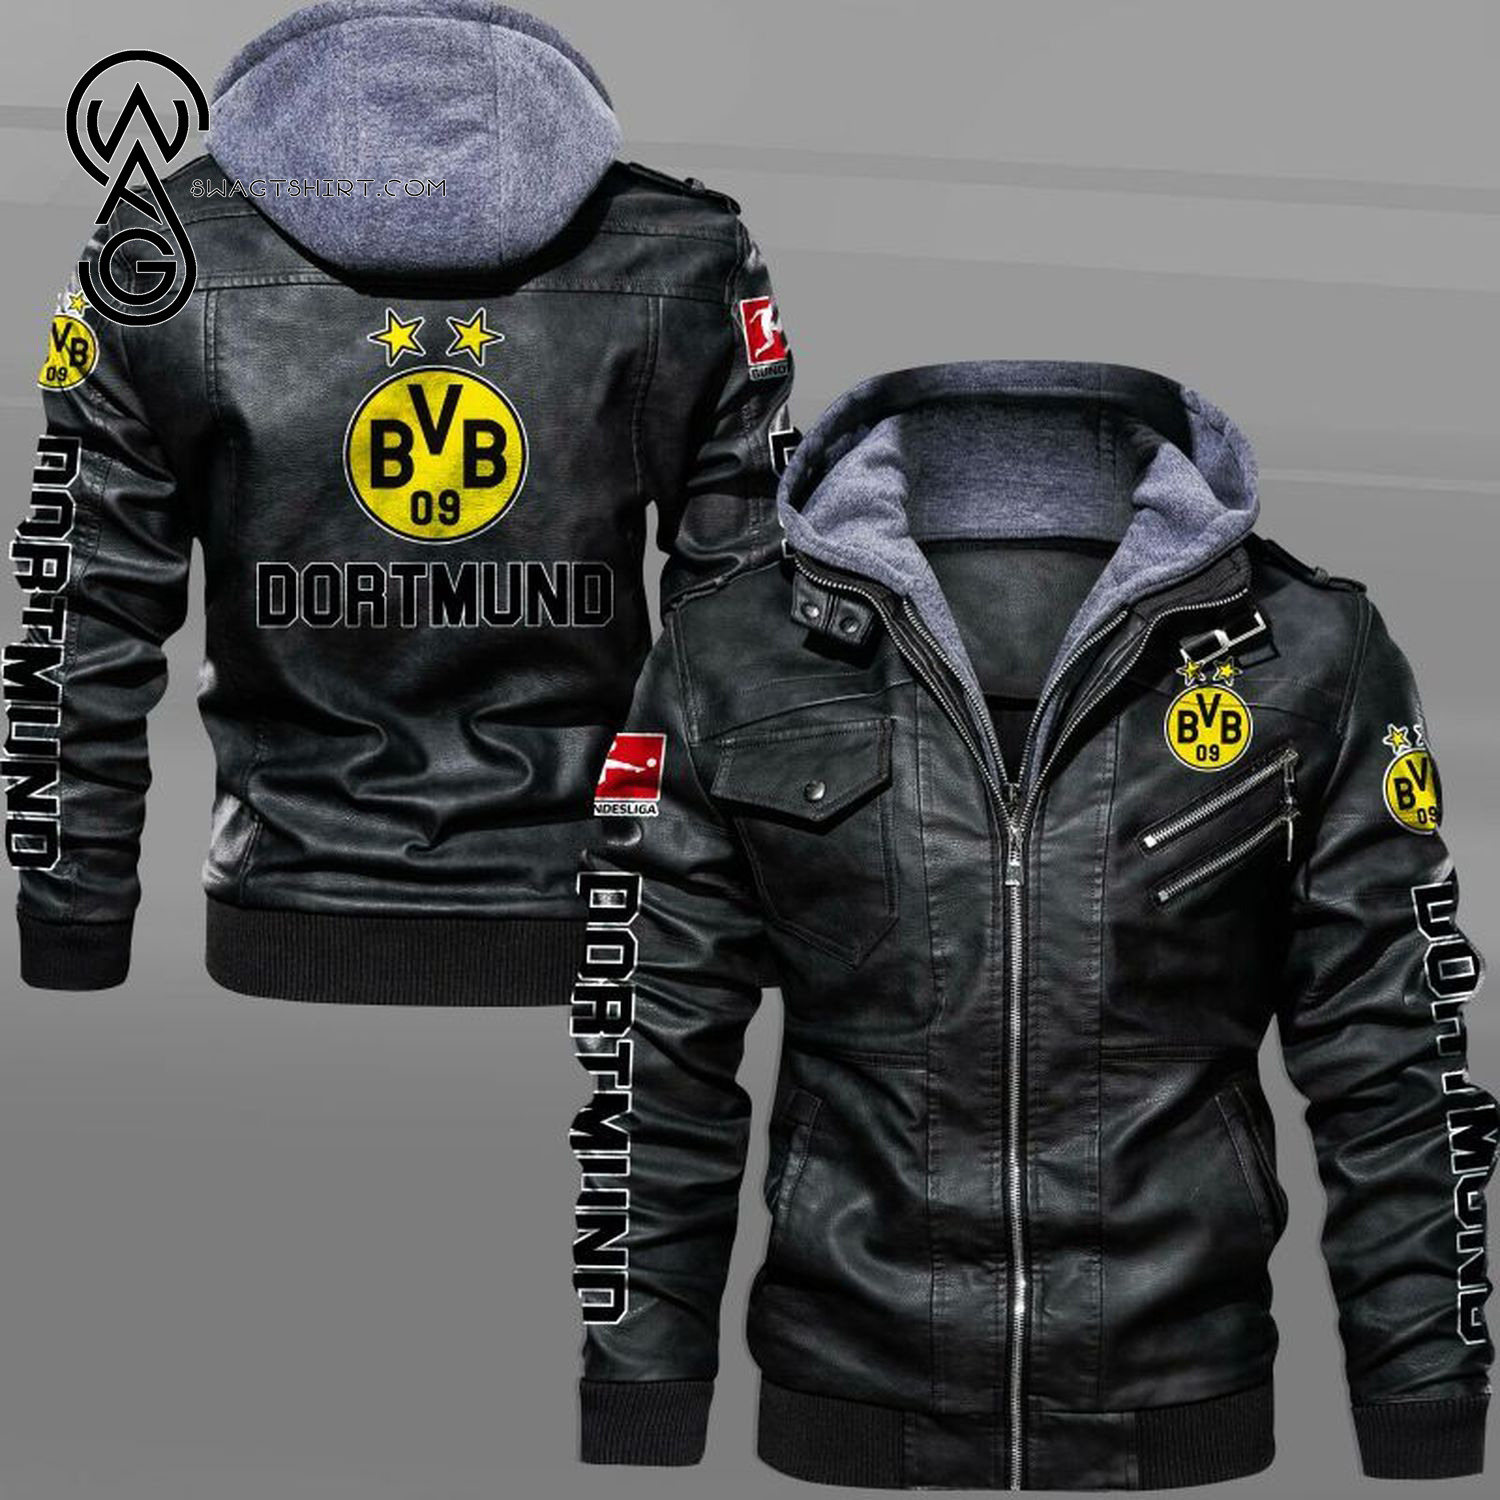 Borussia Dortmund Football Club Leather Jacket